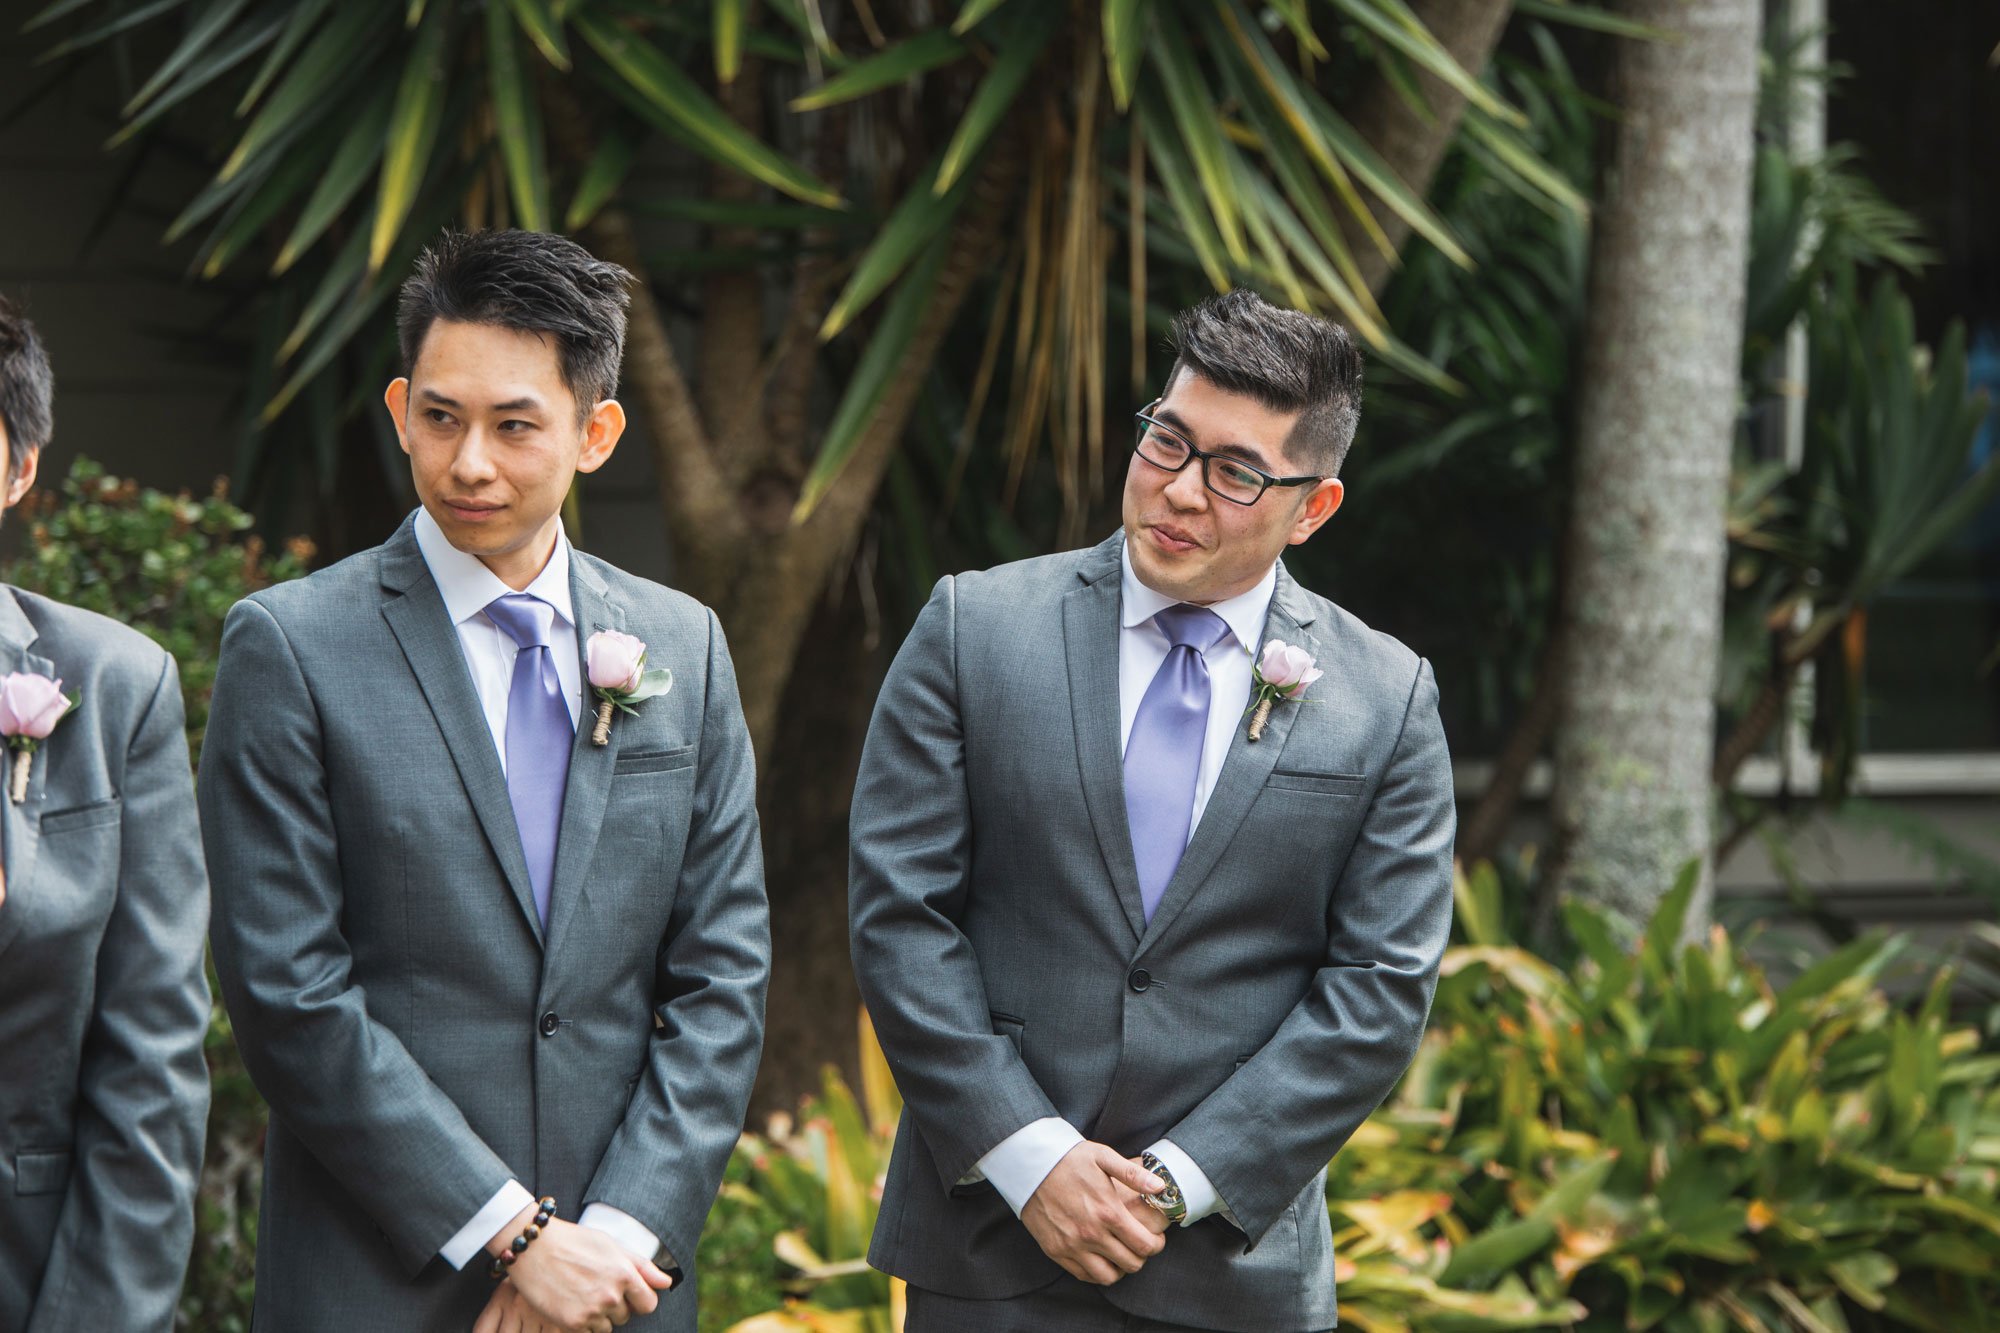 groomsmen at the ceremony